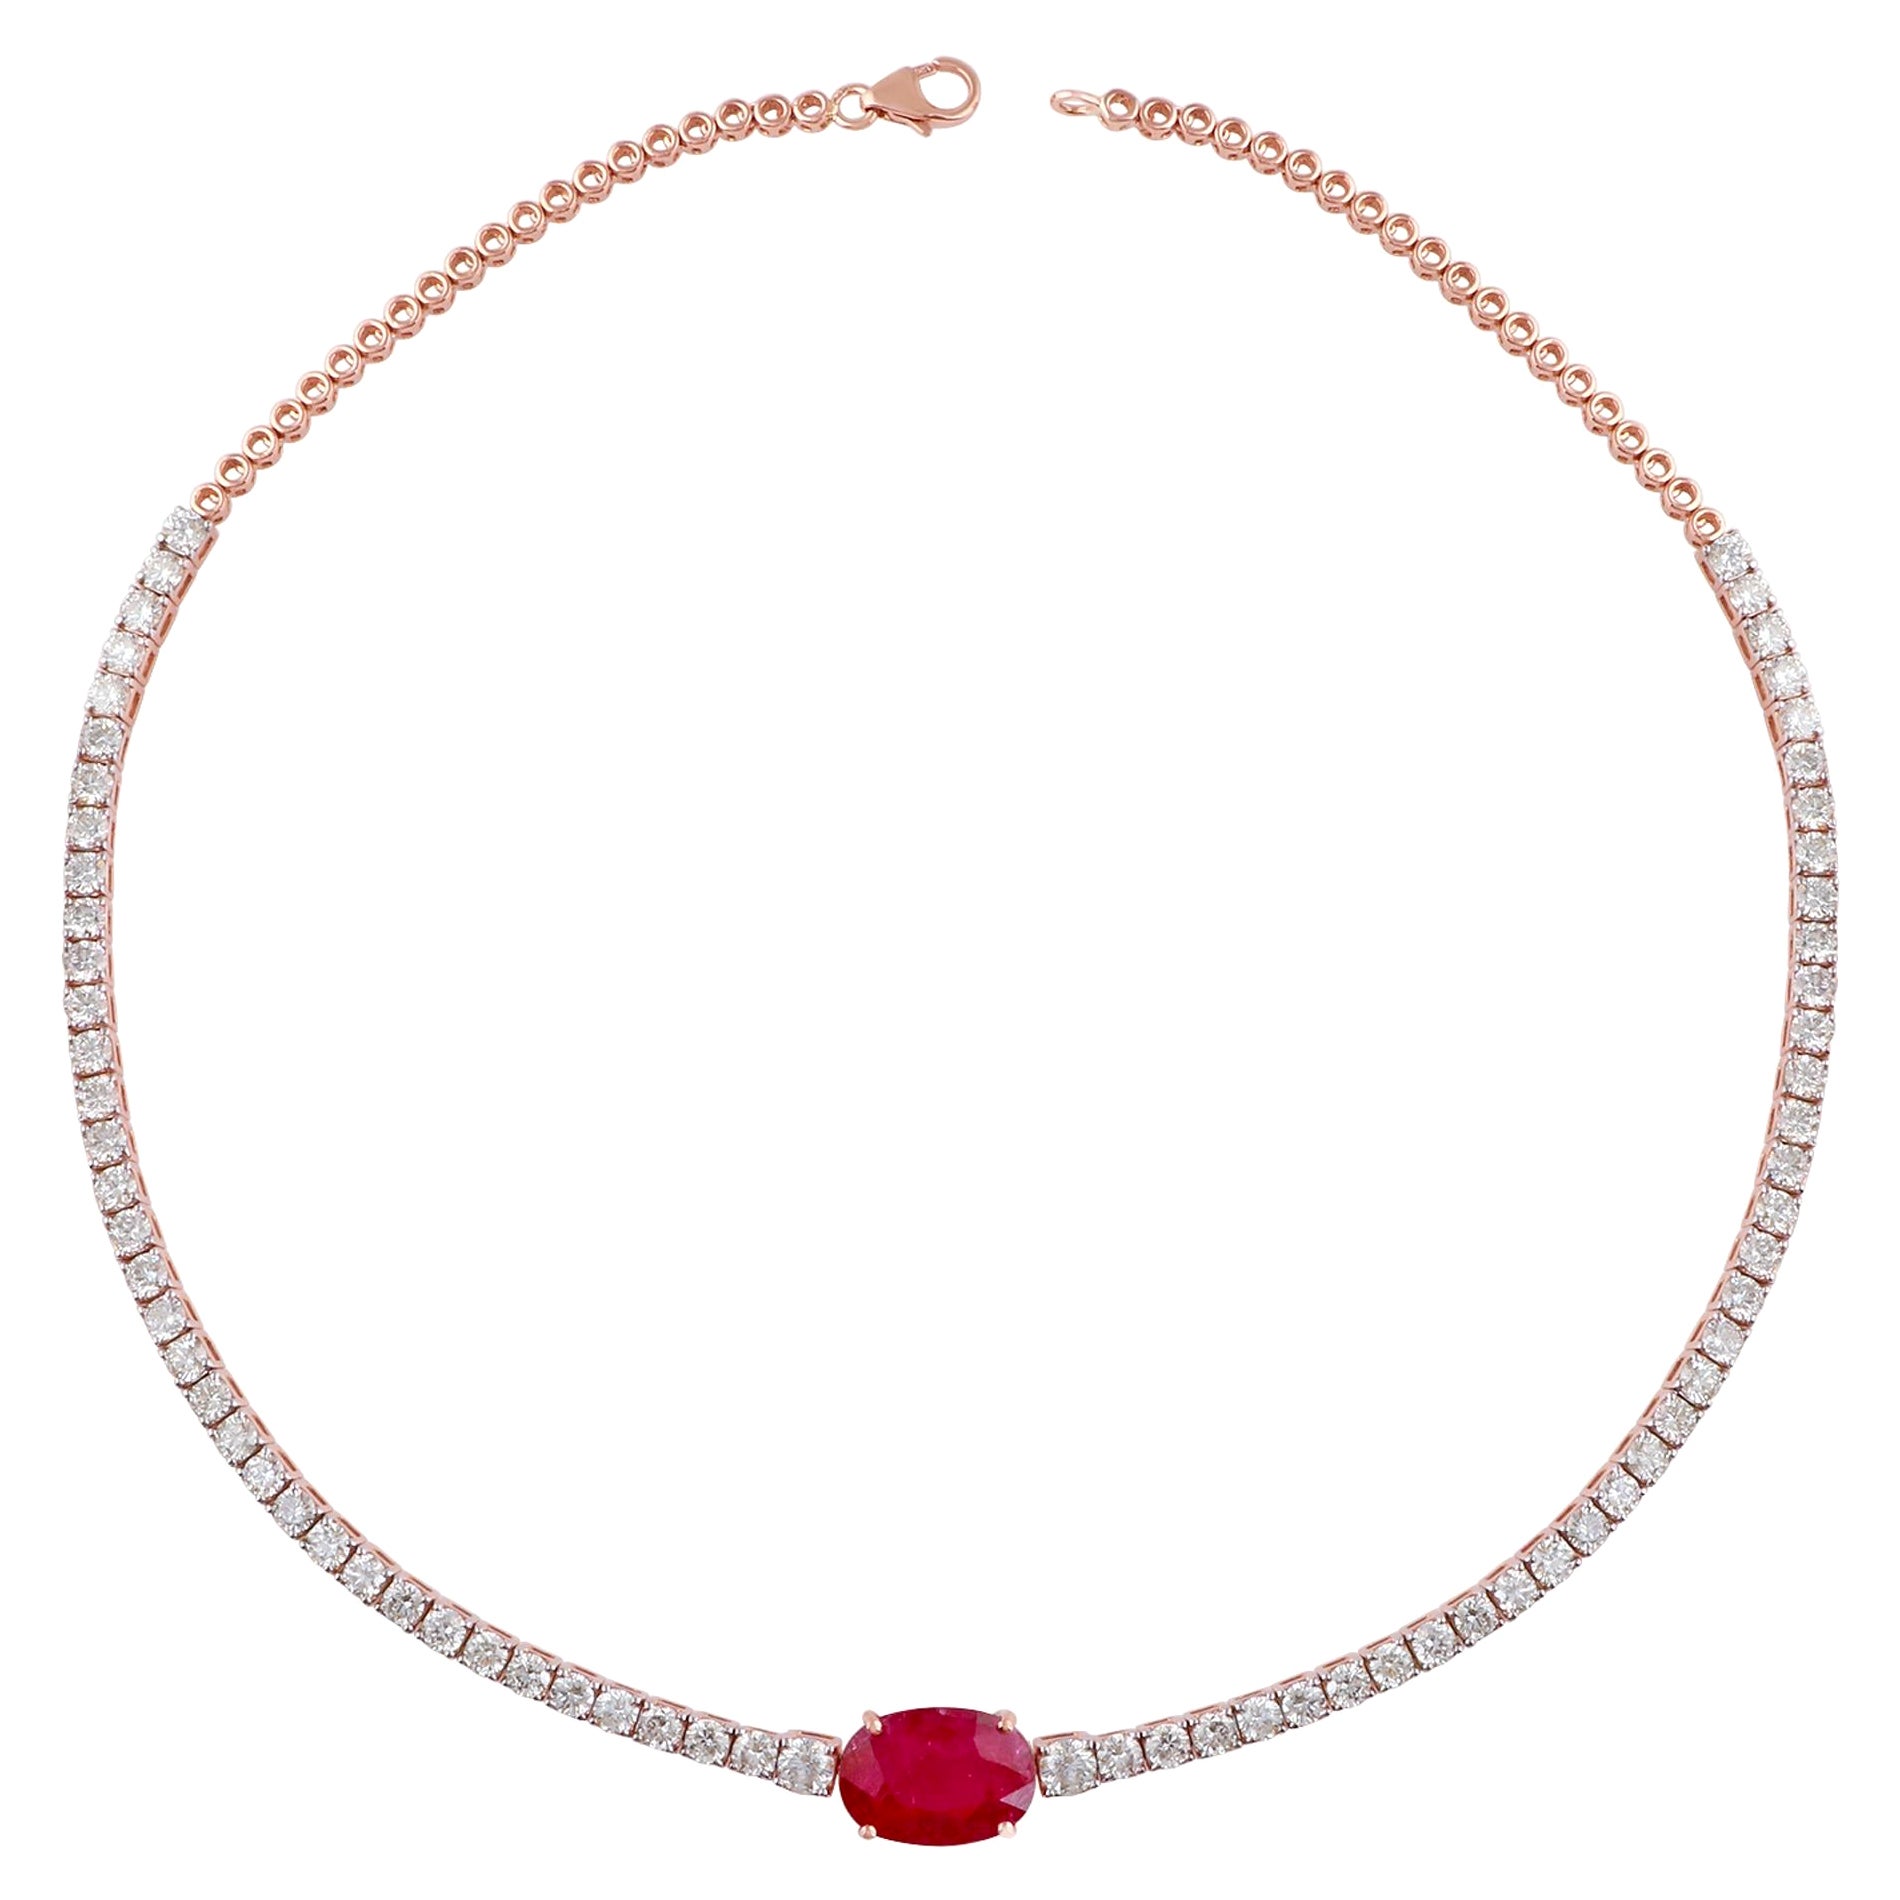 Oval Ruby Gemstone Choker Necklace Diamond 14 Karat Rose Gold Handmade Jewelry